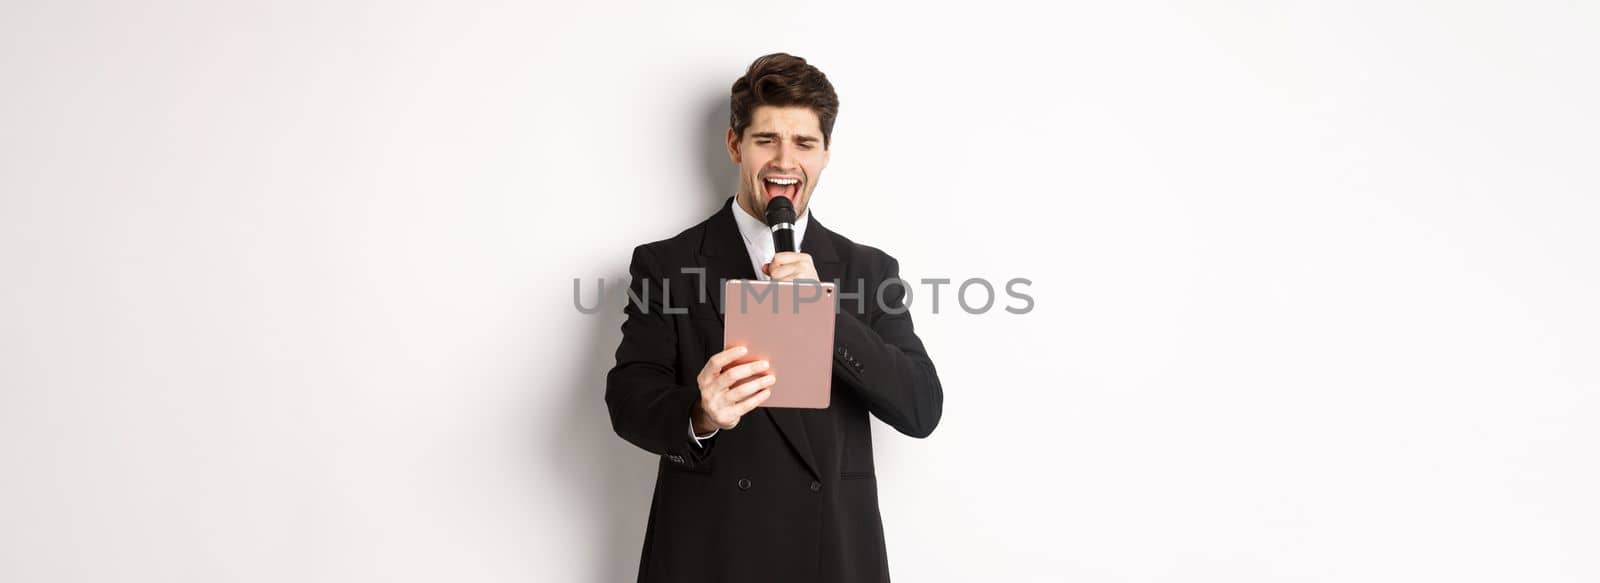 Image of handsome man in black suit, singing karaoke on digital tablet, holding microphone, standing over white background.